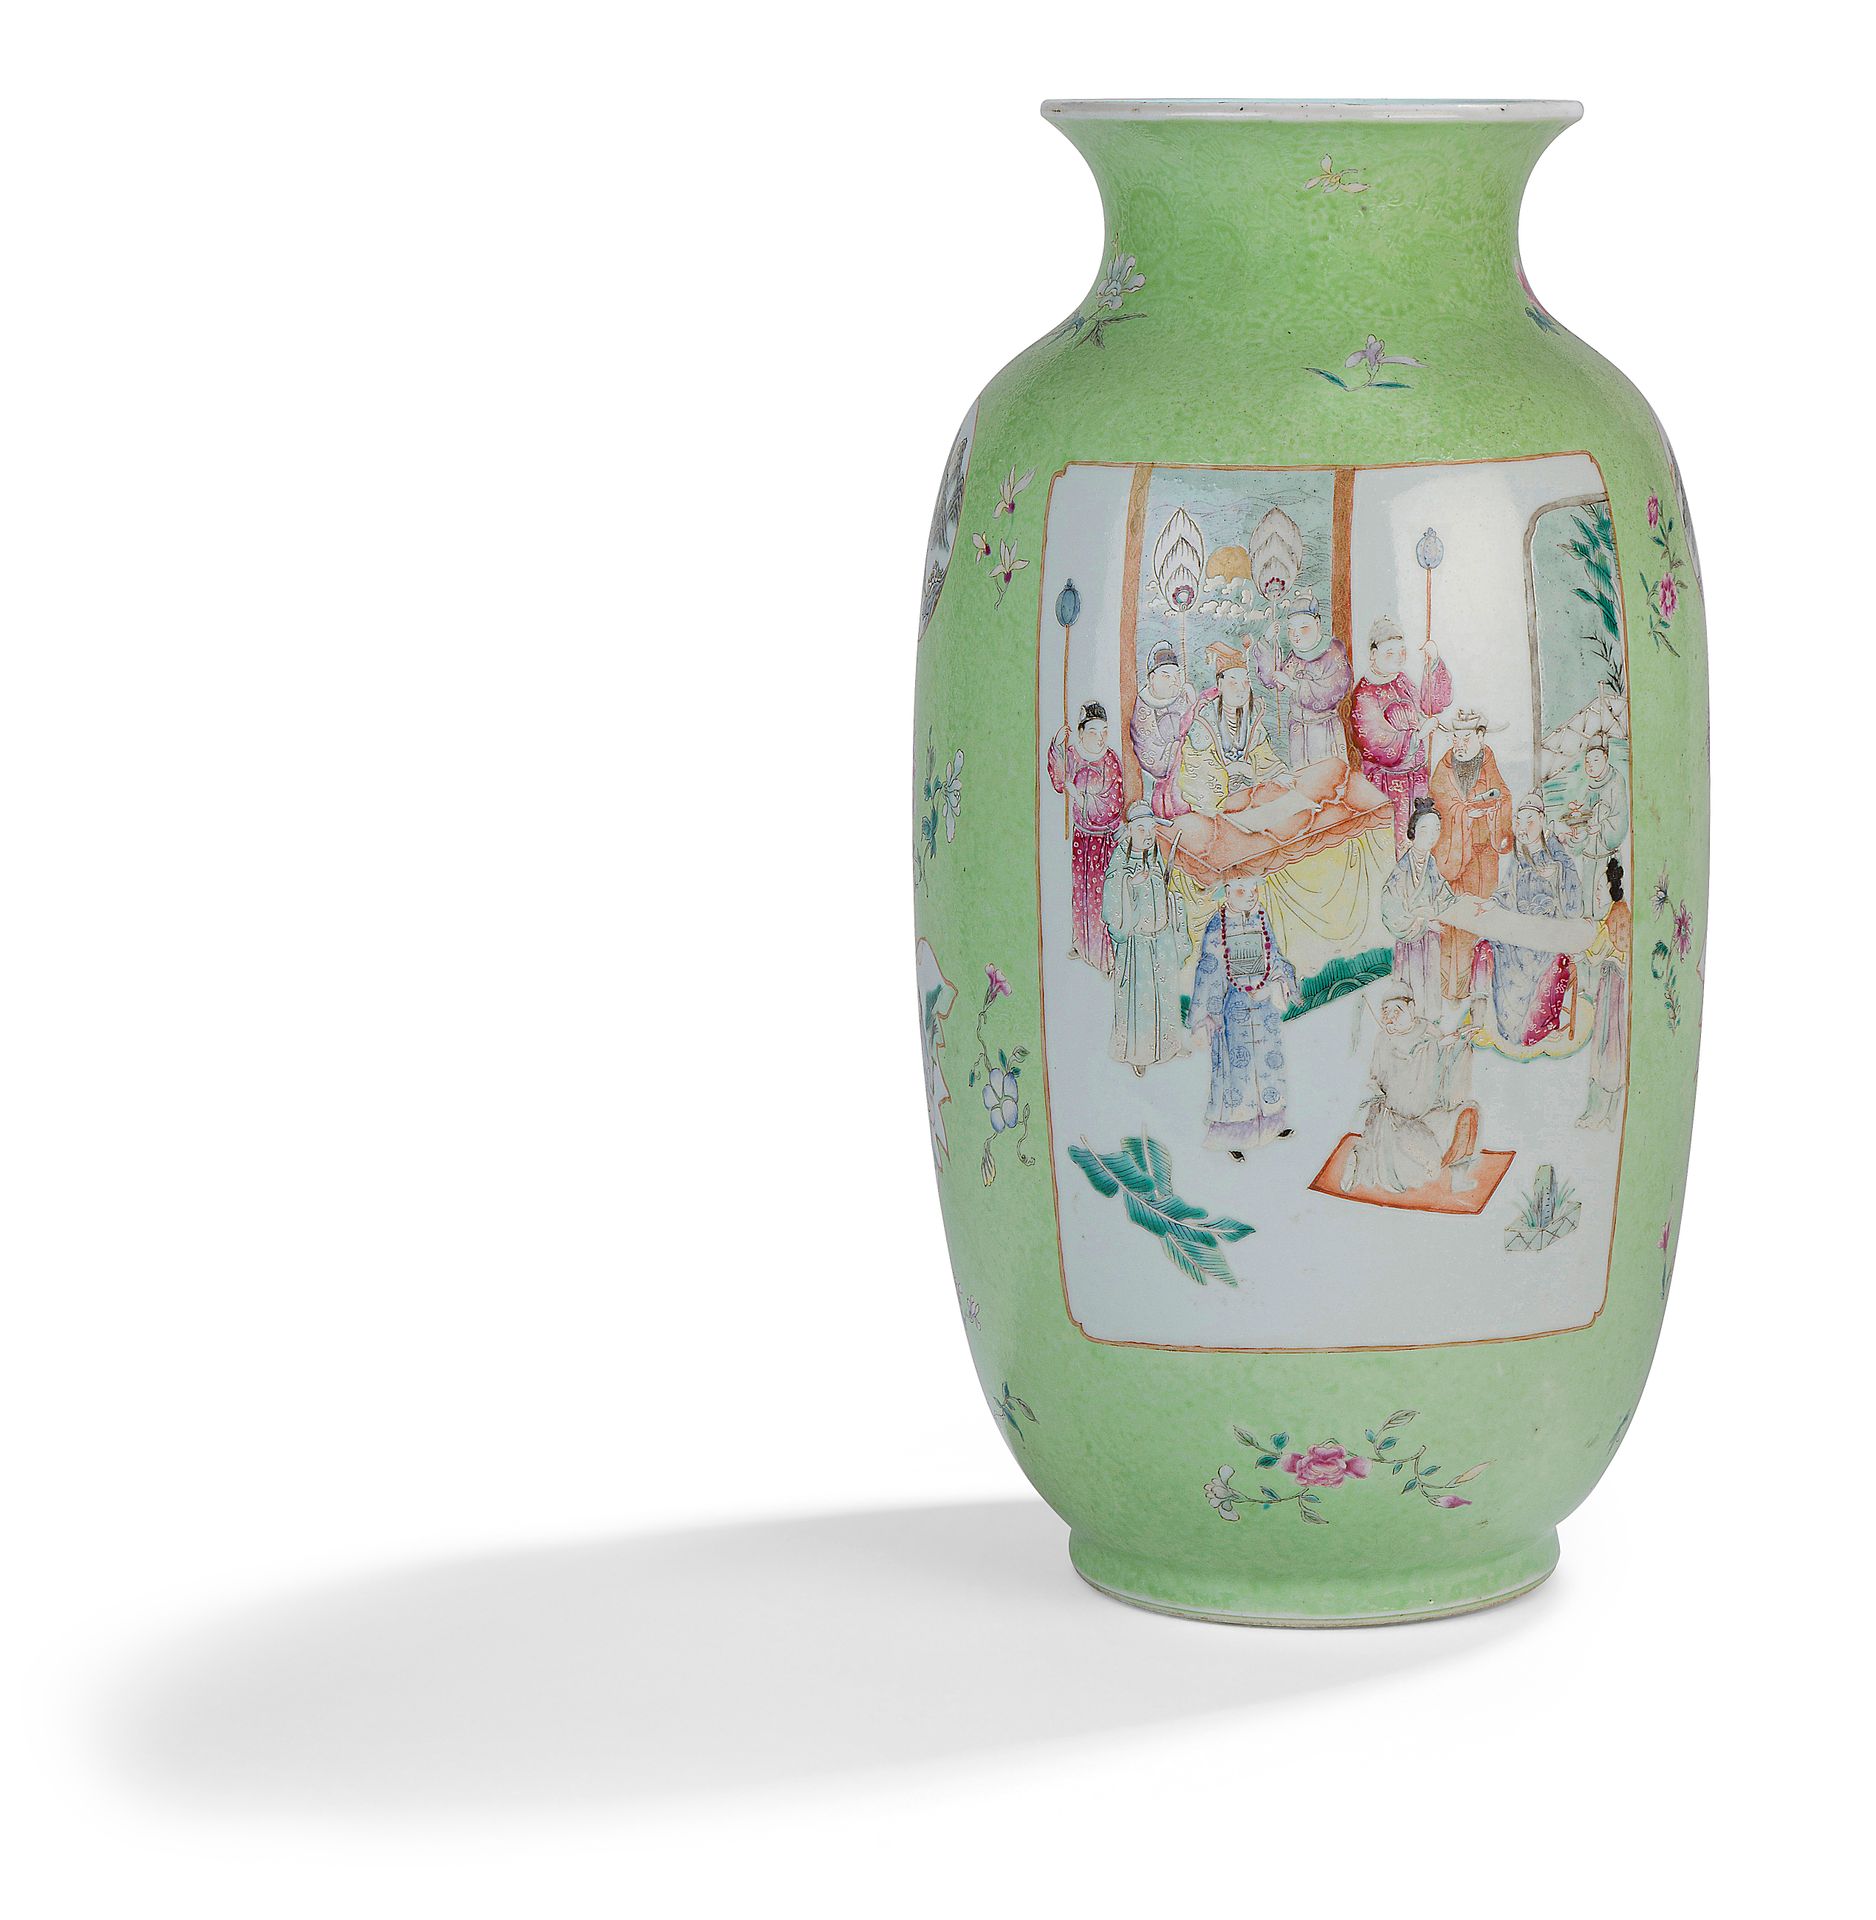 Null 邓龙尊绿地灯笼形瓷瓶，中国，19世纪 瓷瓶上饰有
风格化的卷轴和多色珐琅的花纹，卵形的瓶身上有两个长方形的卡口，用粉彩装饰中国古典传说的场景。三国演义&hellip;